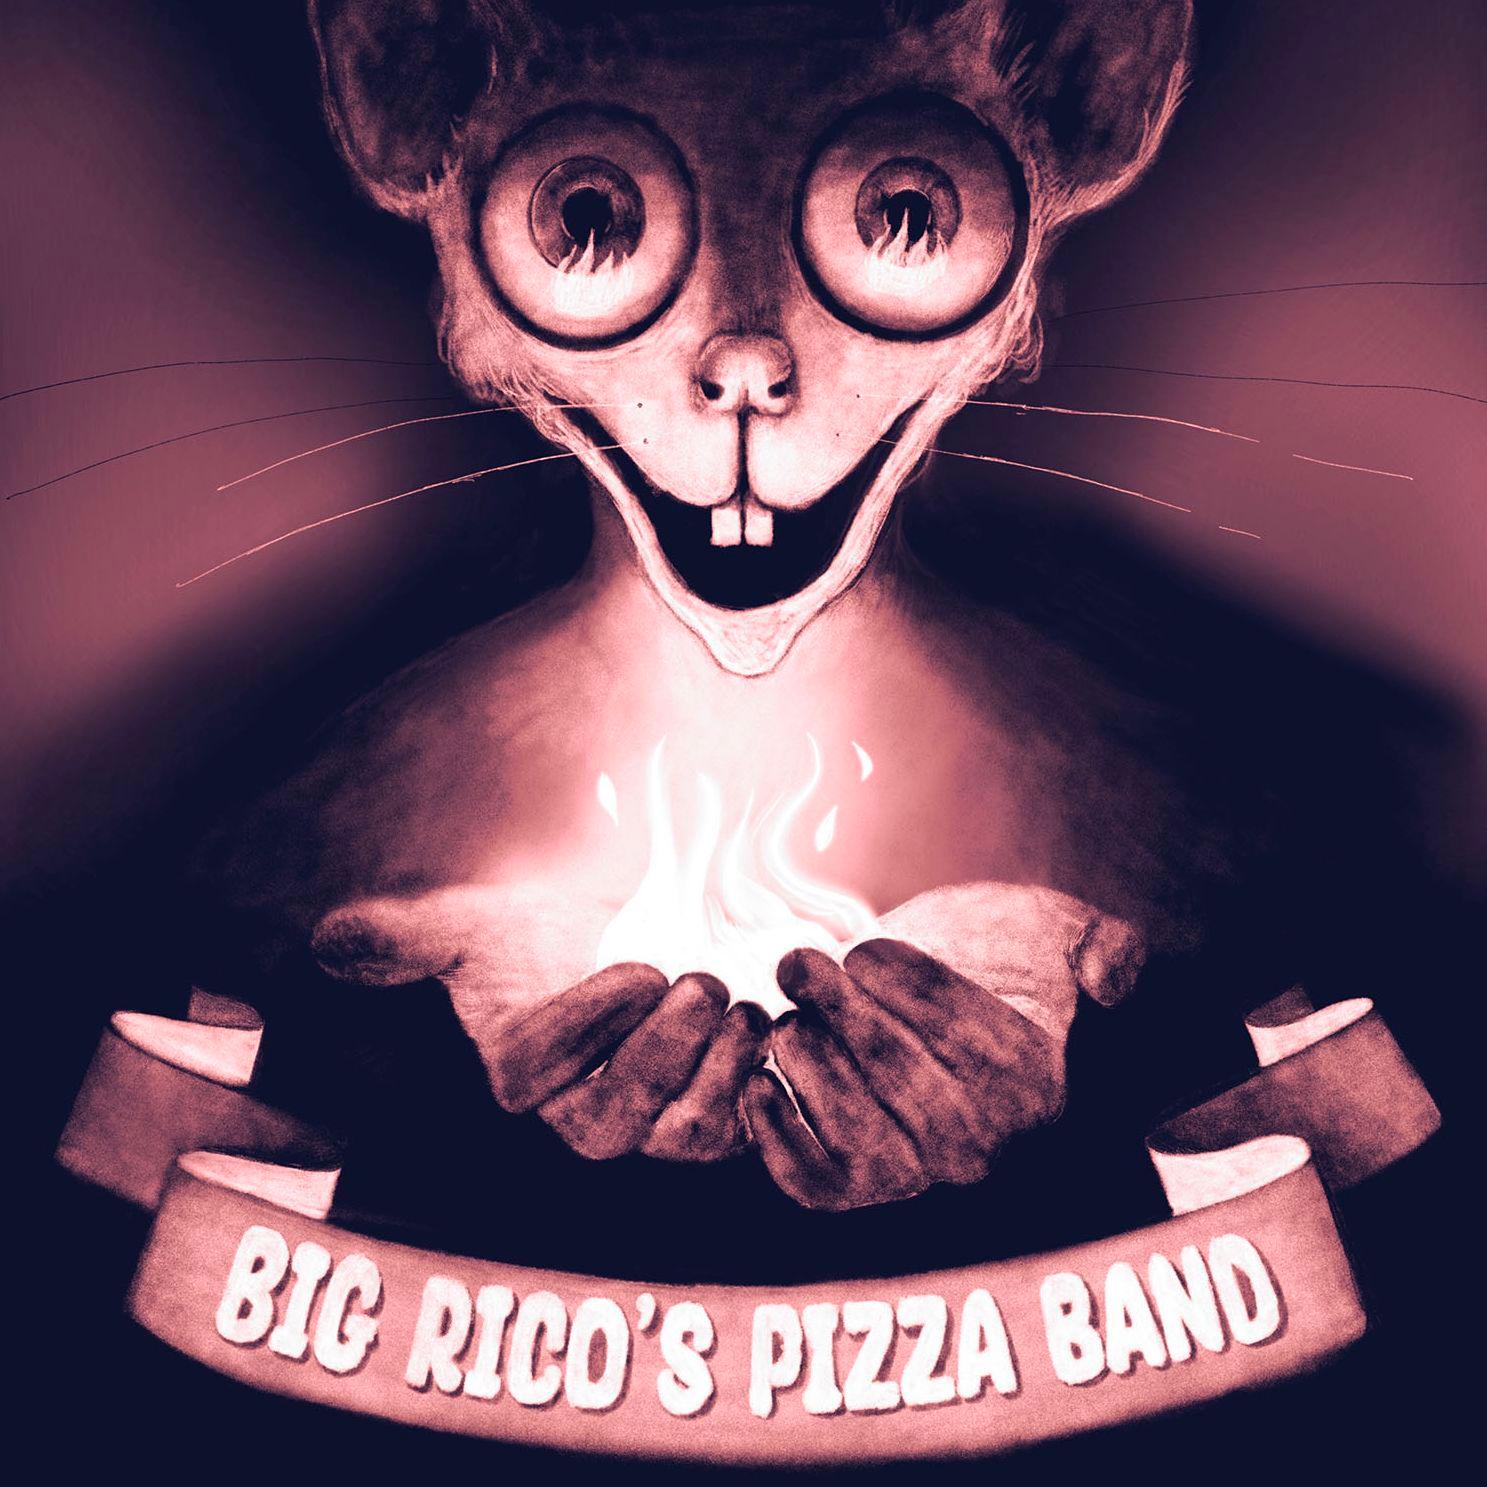 Thumbnail for "223 - Big Rico's Pizza Band".